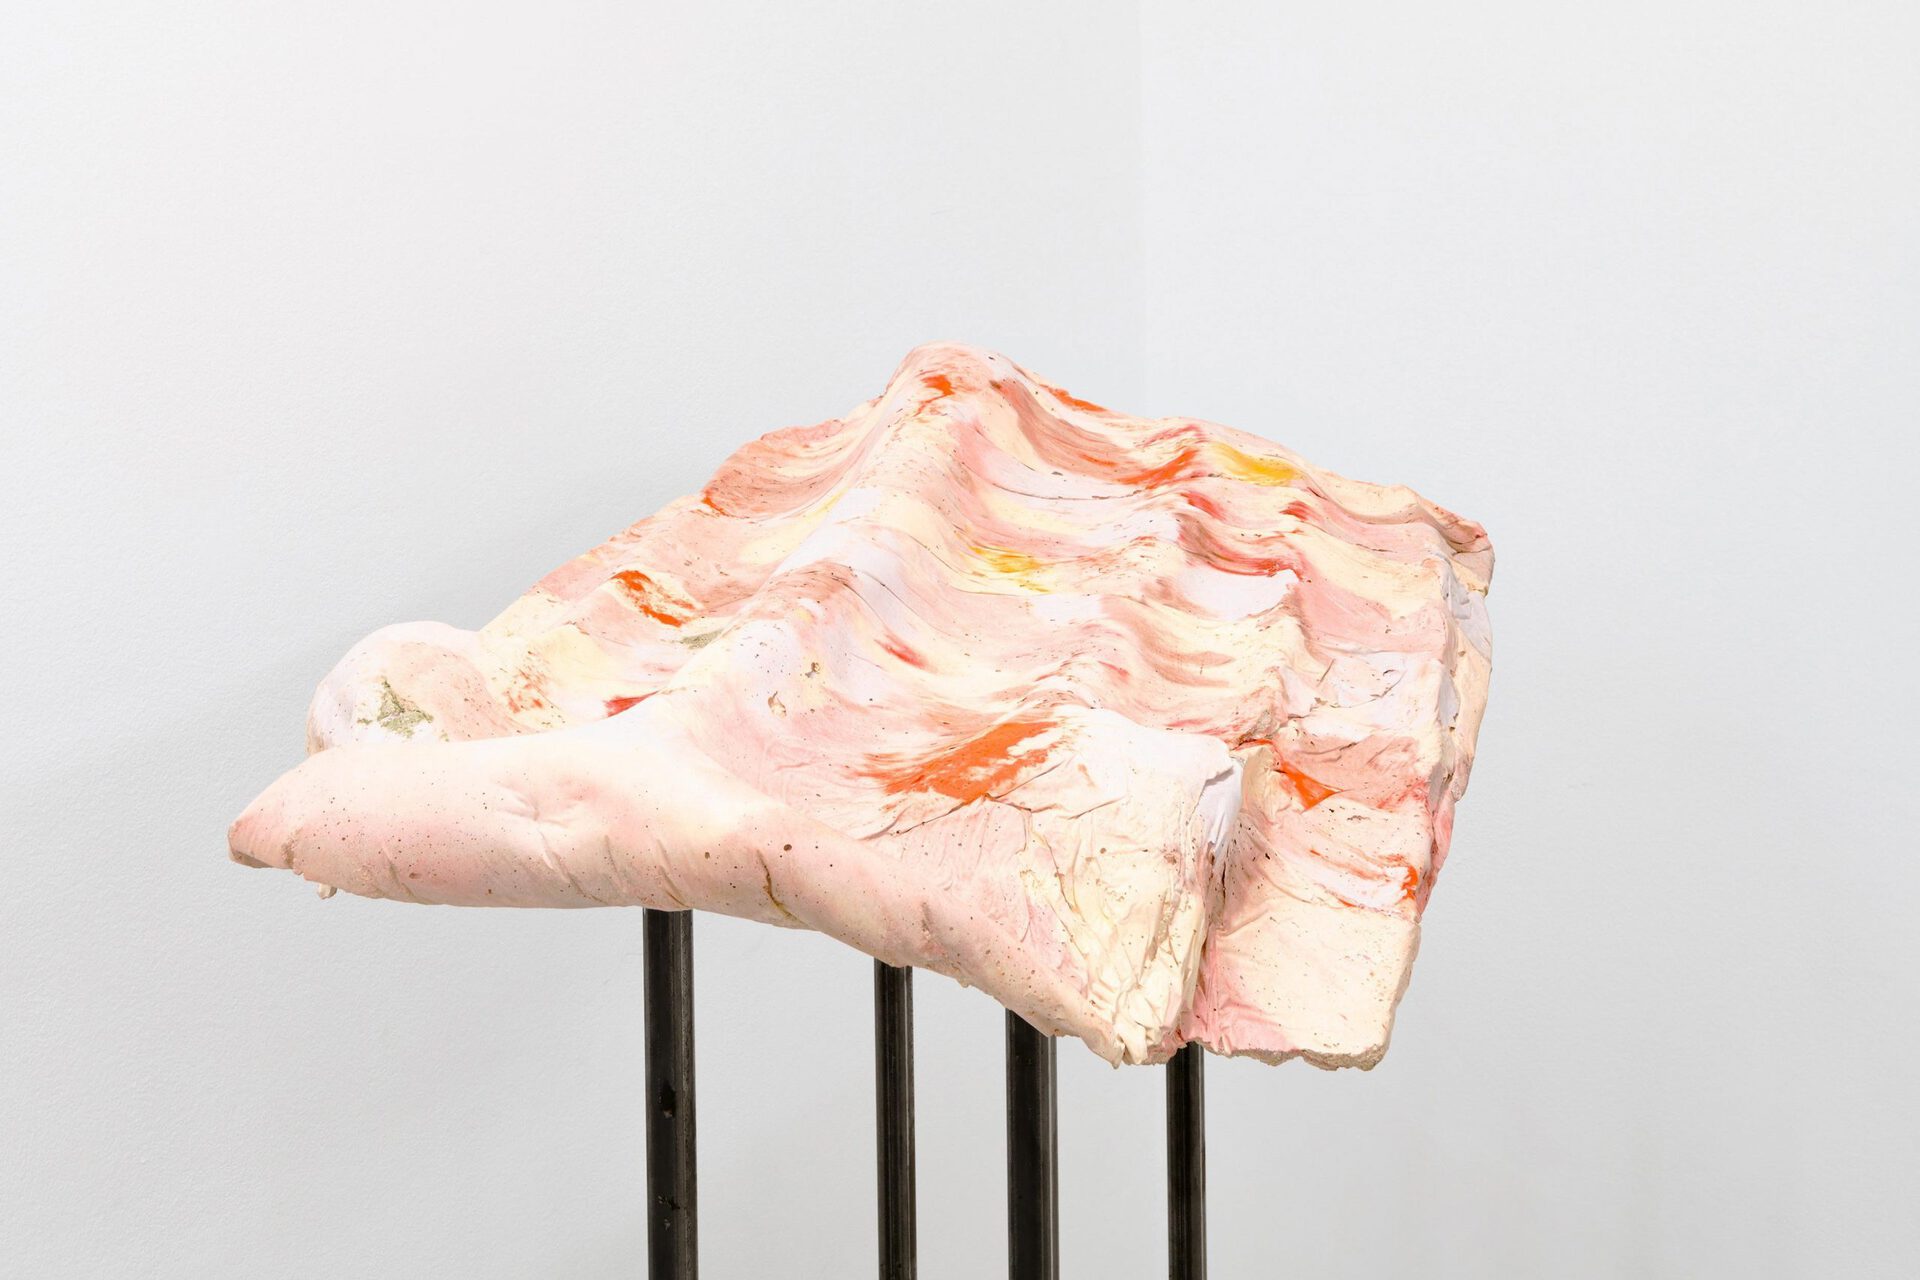 Johanna Magdalena Guggenberger, Basis 7 (wüster frühling), 2022, pigmented concrete, metal, 66 × 52 × 78 cm. Courtesy Wonnerth Dejaco, Belmacz and the artist. Photo: Peter Mochi